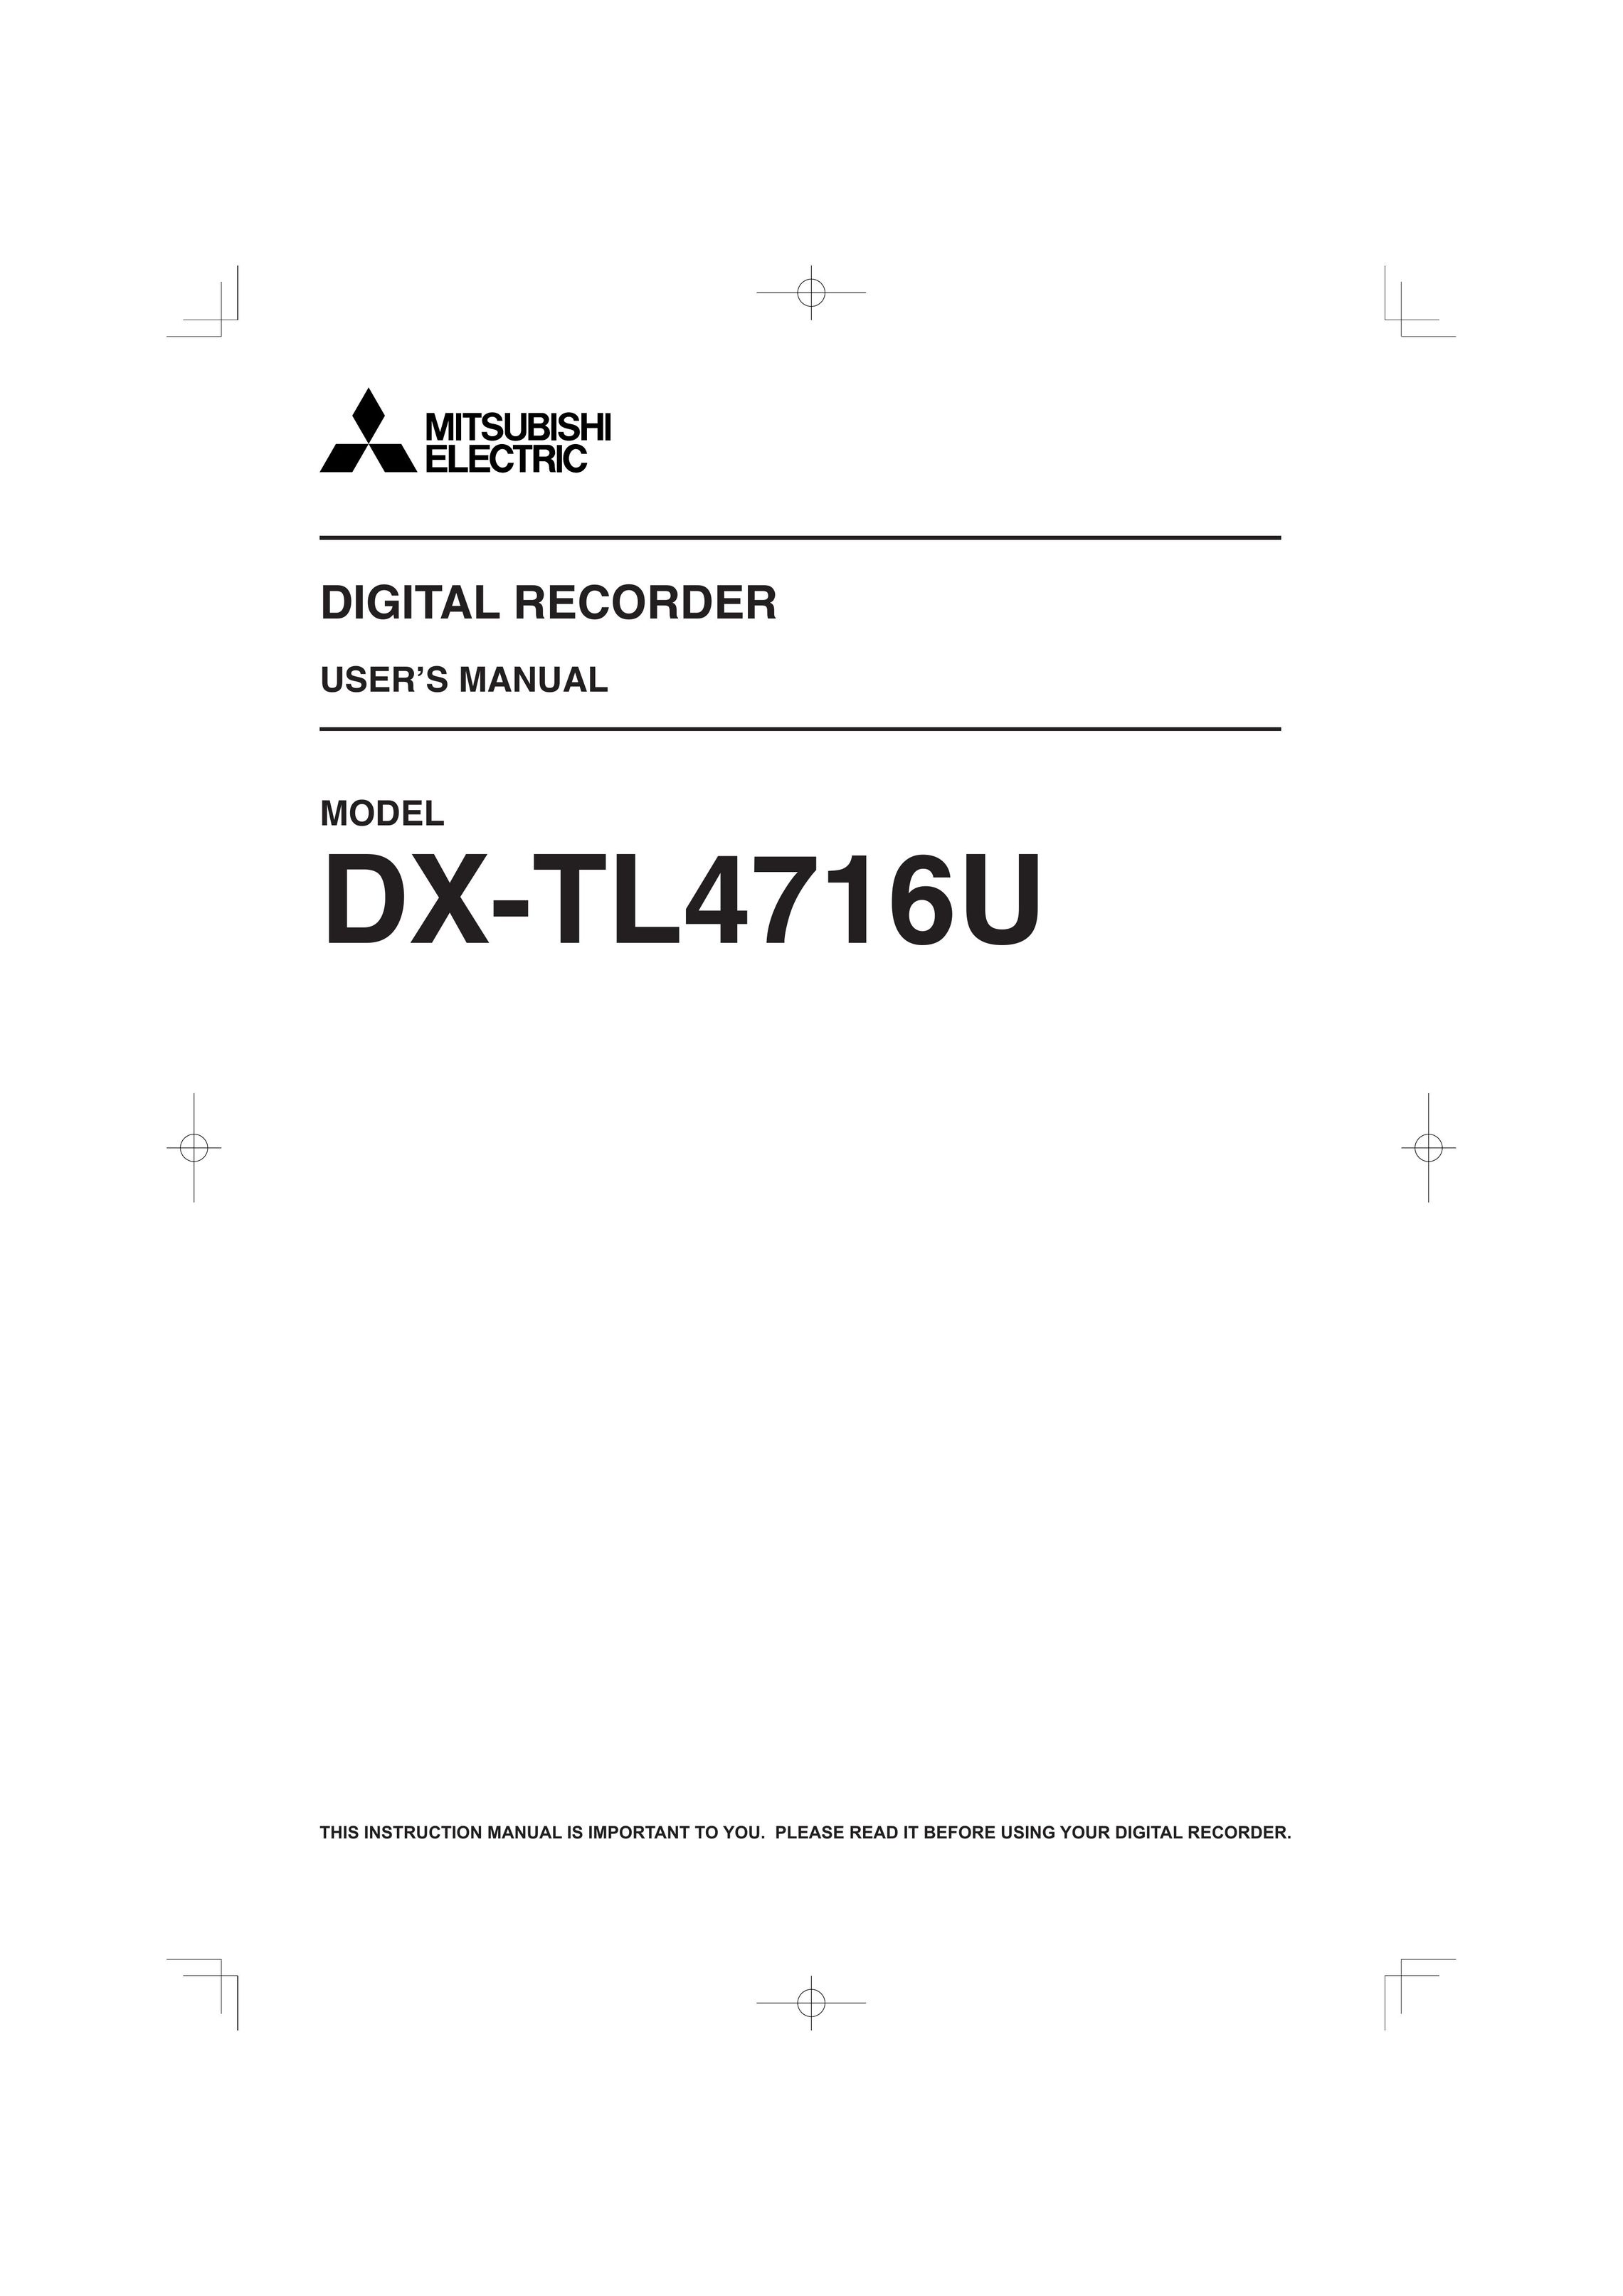 Mitsumi electronic DX-TL4716U DVR User Manual